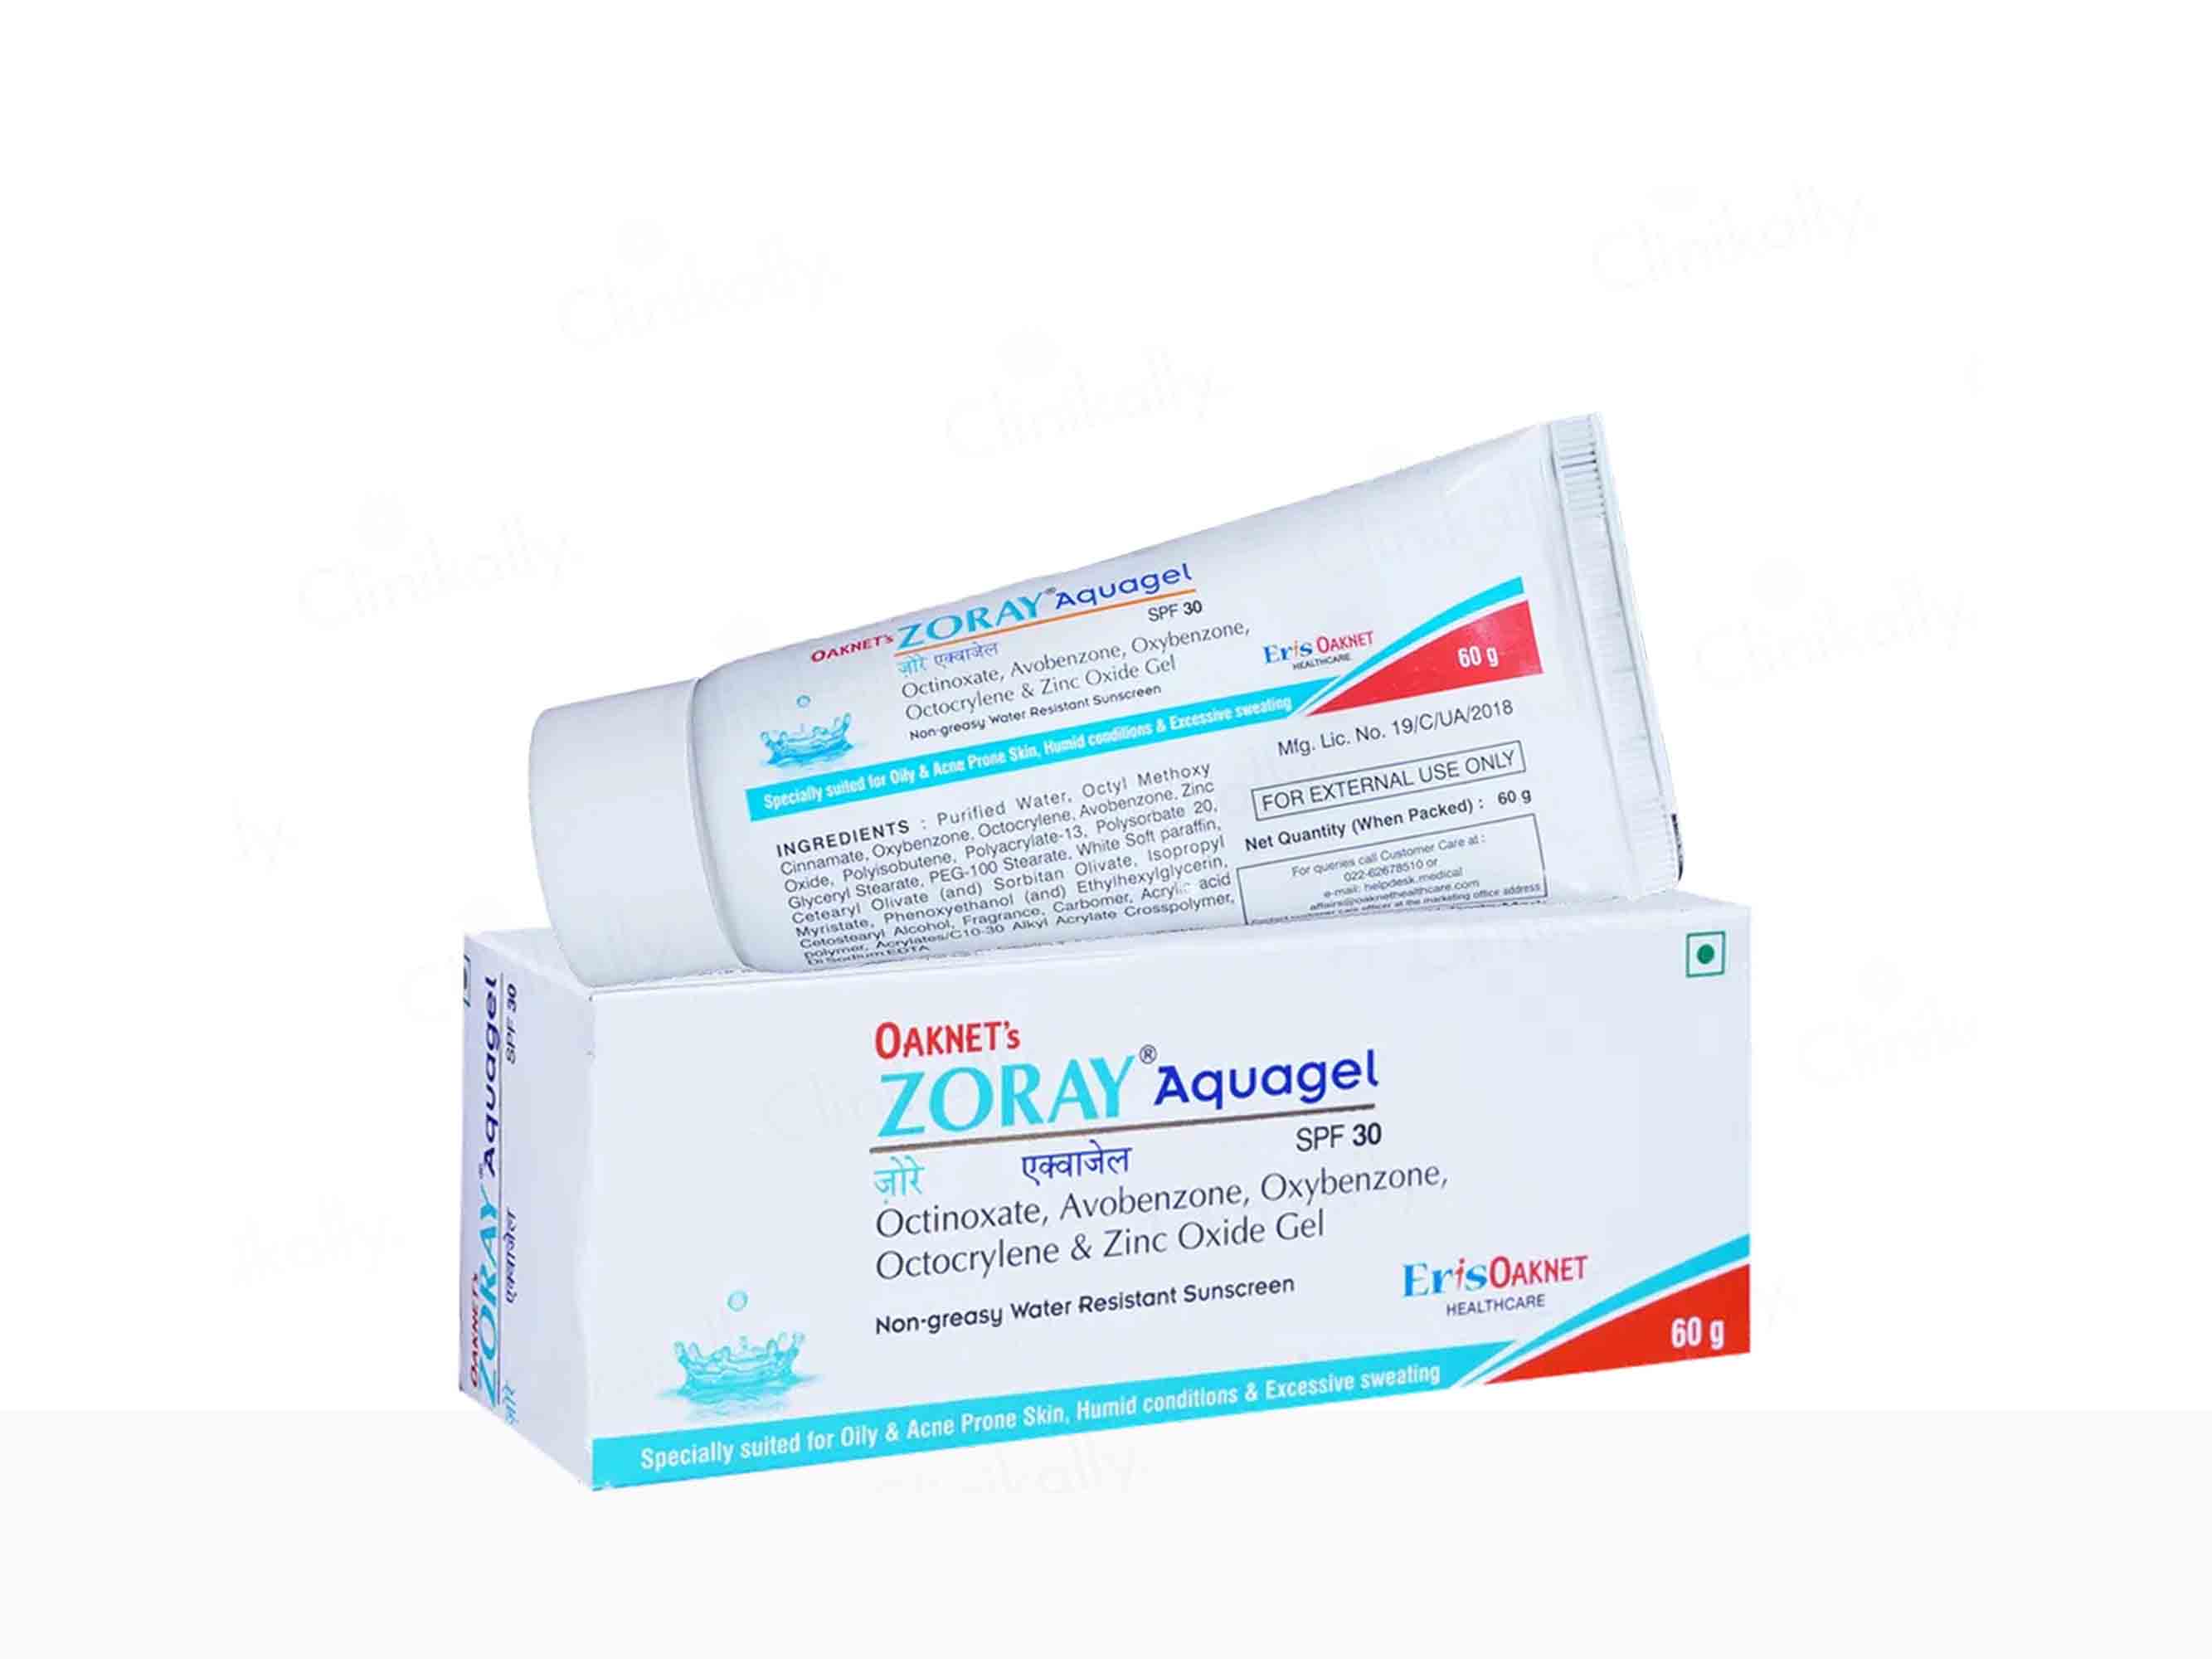 Zoray Aquagel Sunscreen SPF 30